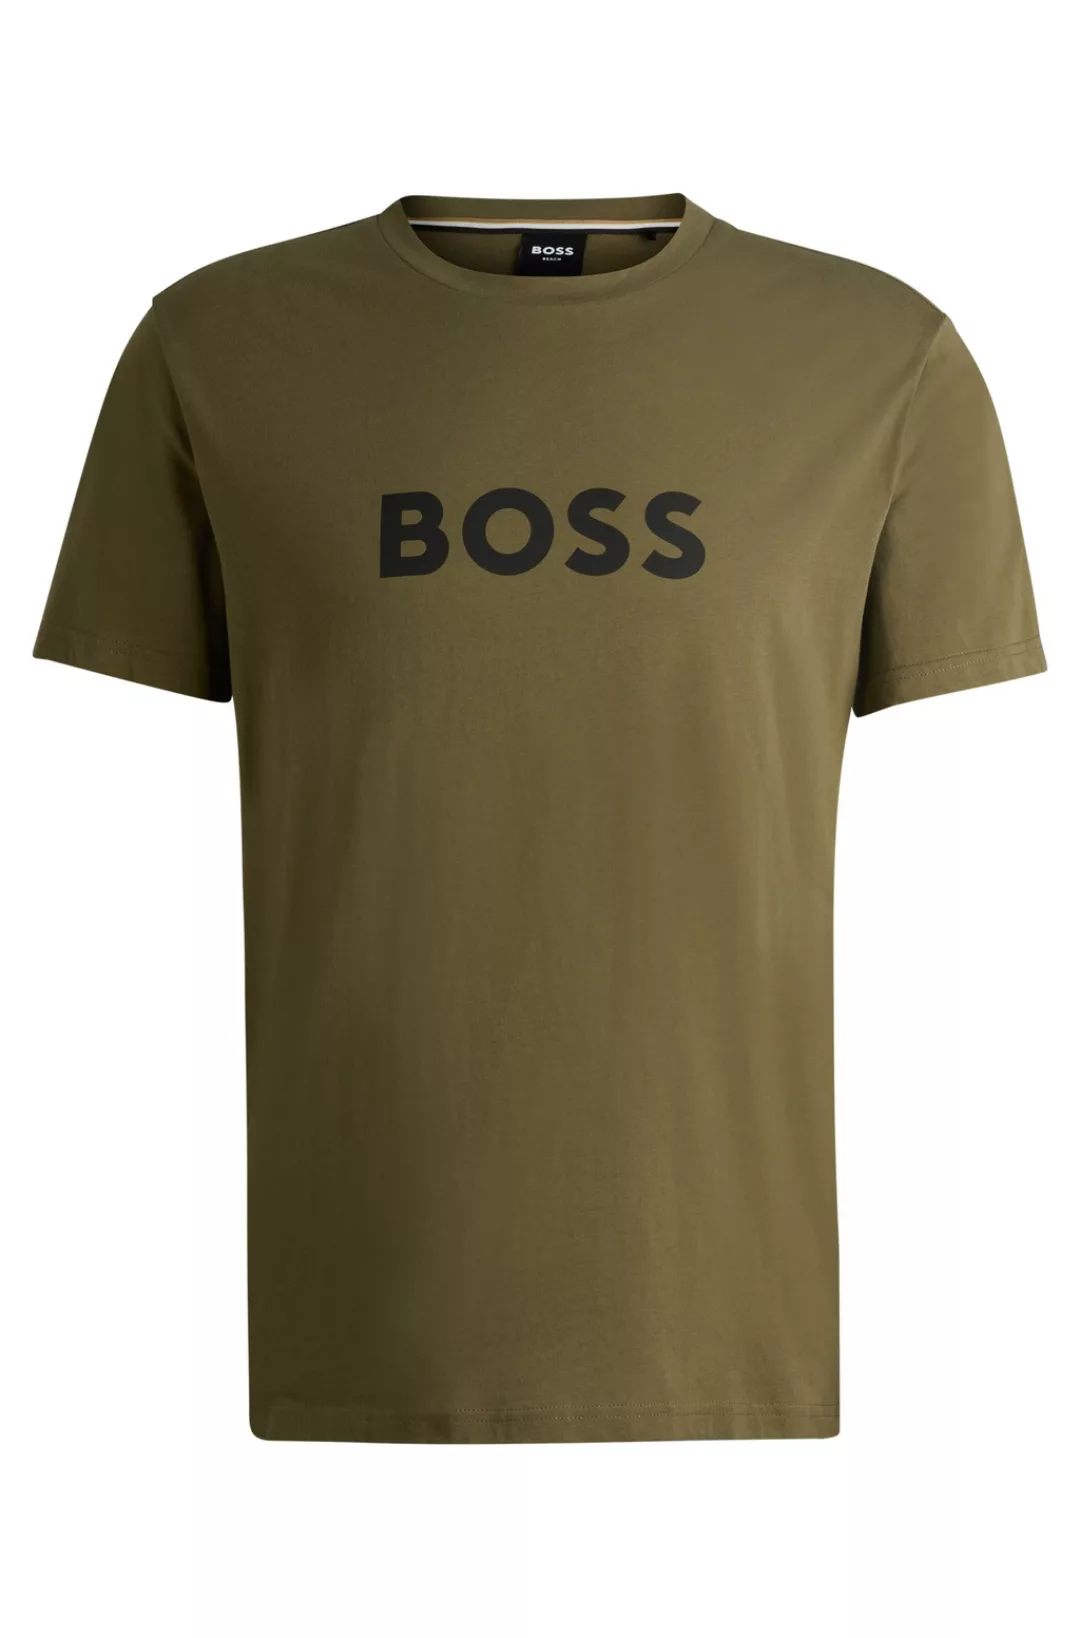 BOSS T-Shirt T-Shirt RN mit großem BOSS Logoprint, Rundhals günstig online kaufen